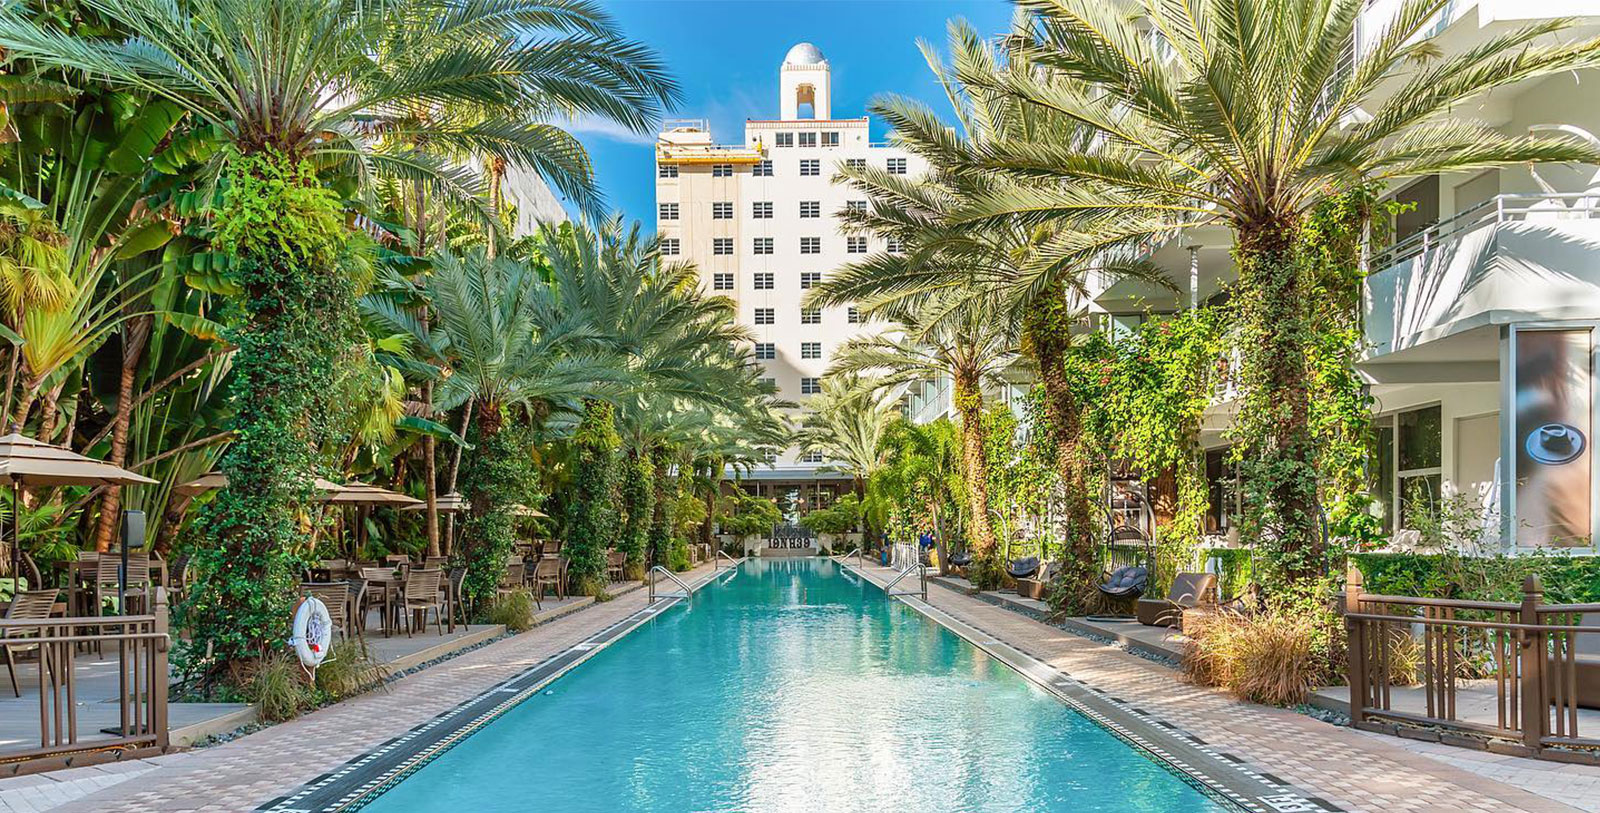 The National Hotel, Miami Beach, FL | Historic Hotels of America